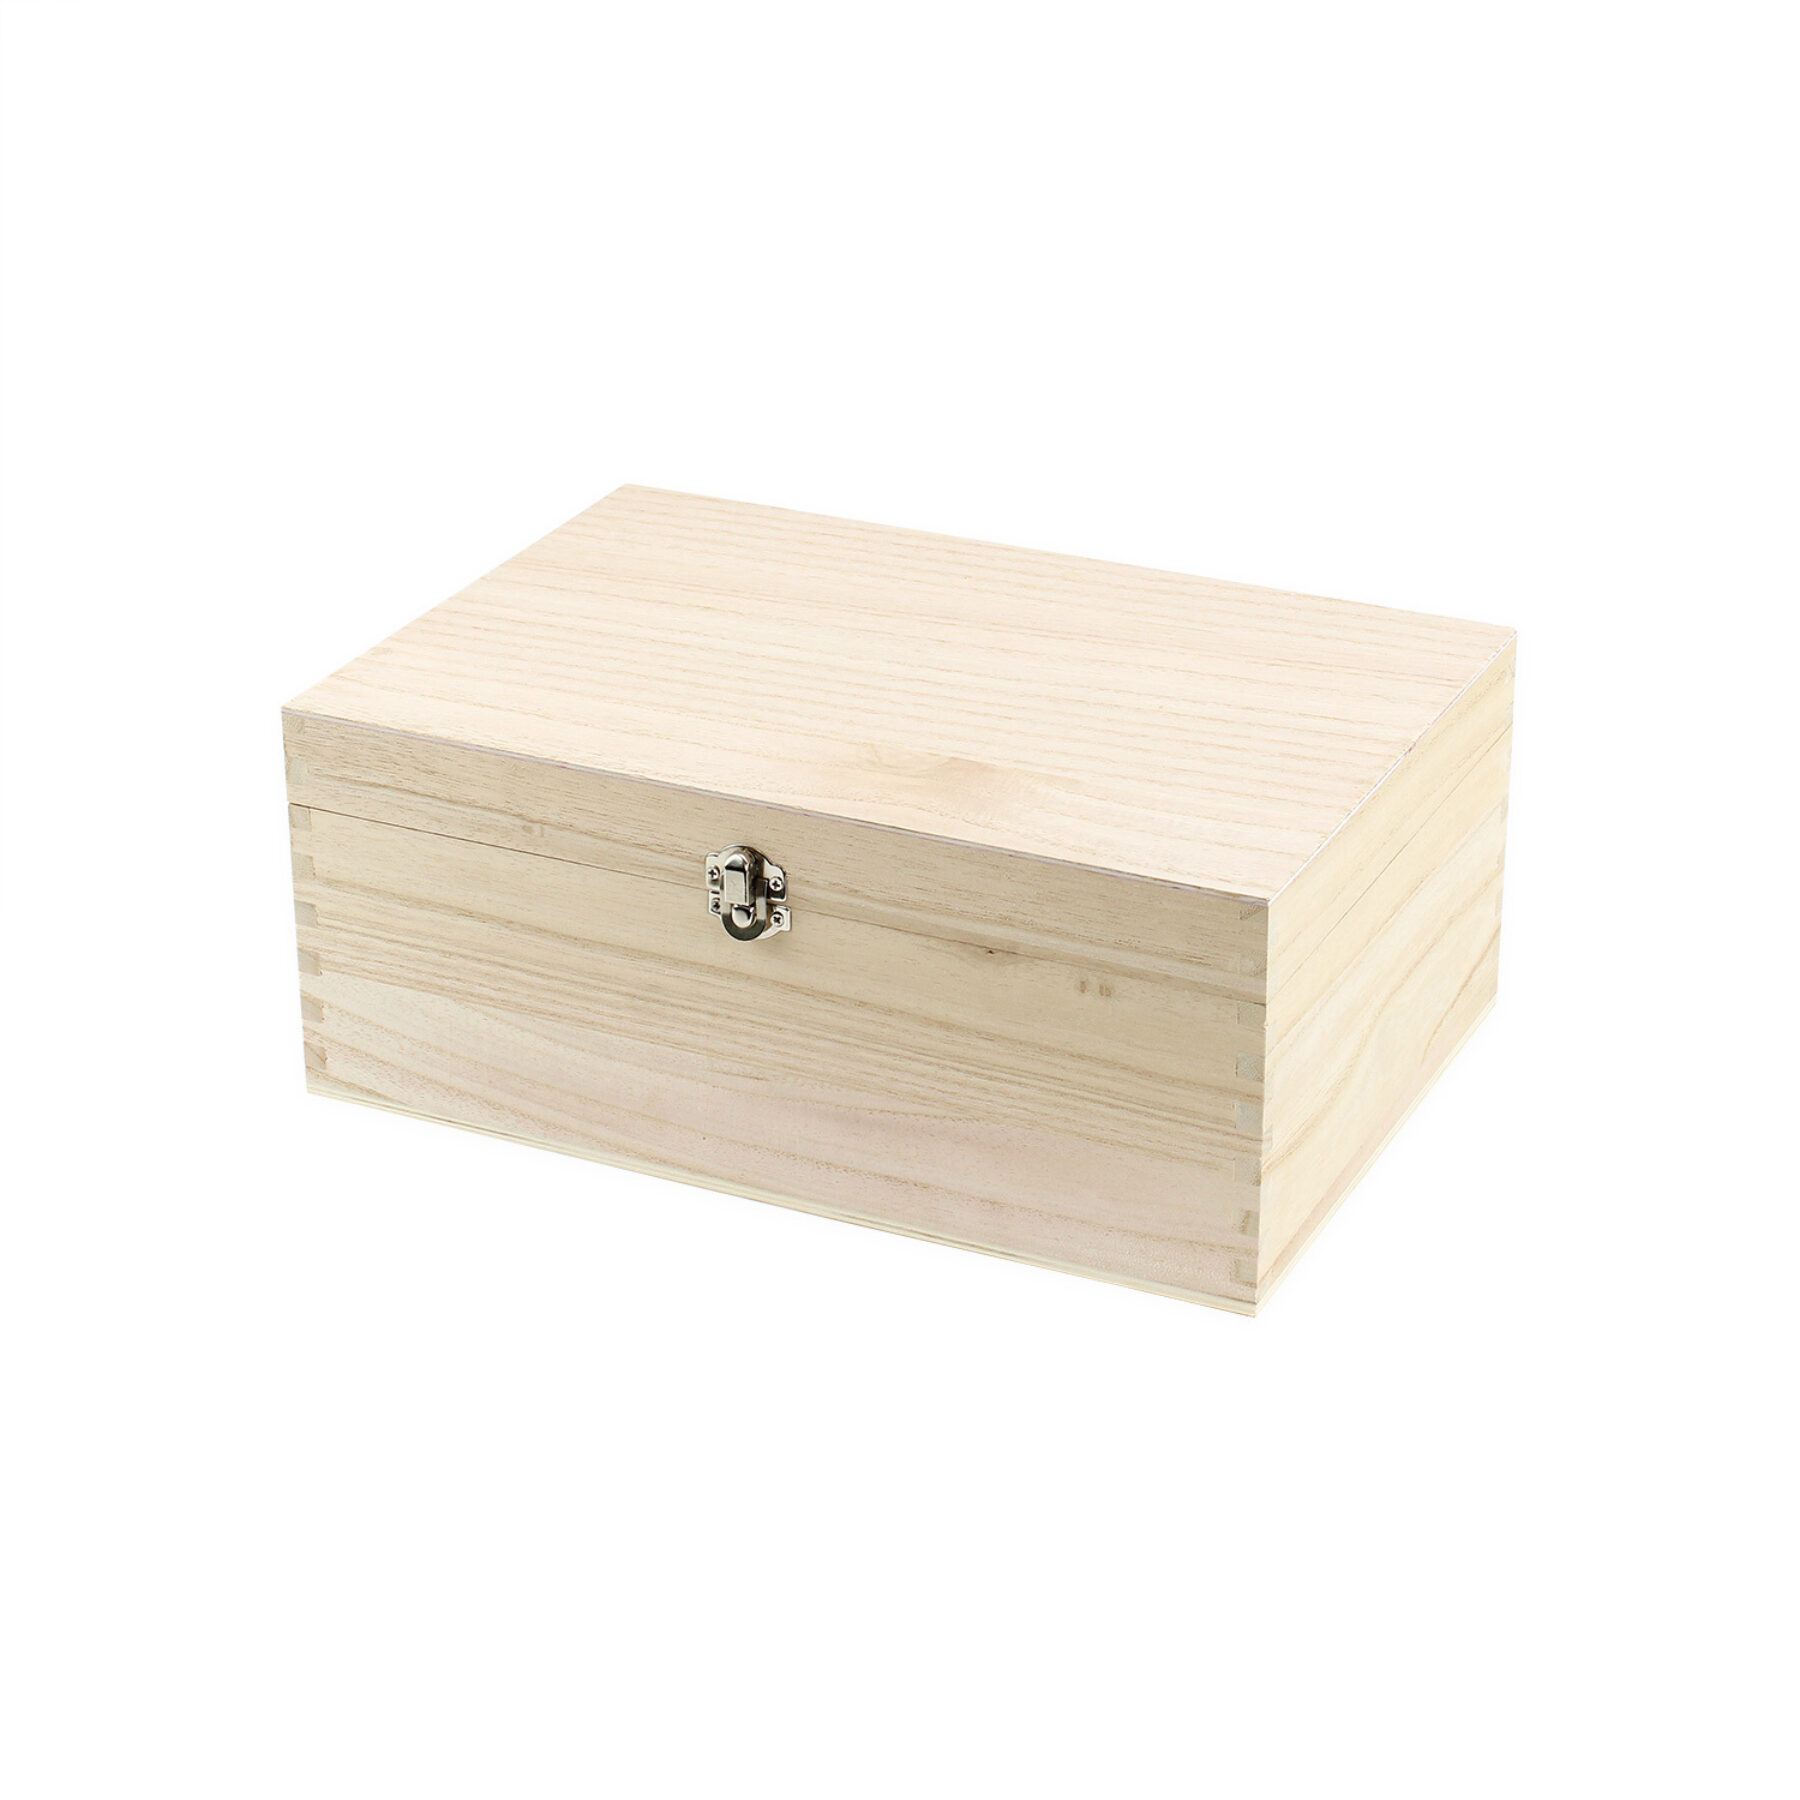 12 Inch Wooden Box Hamper